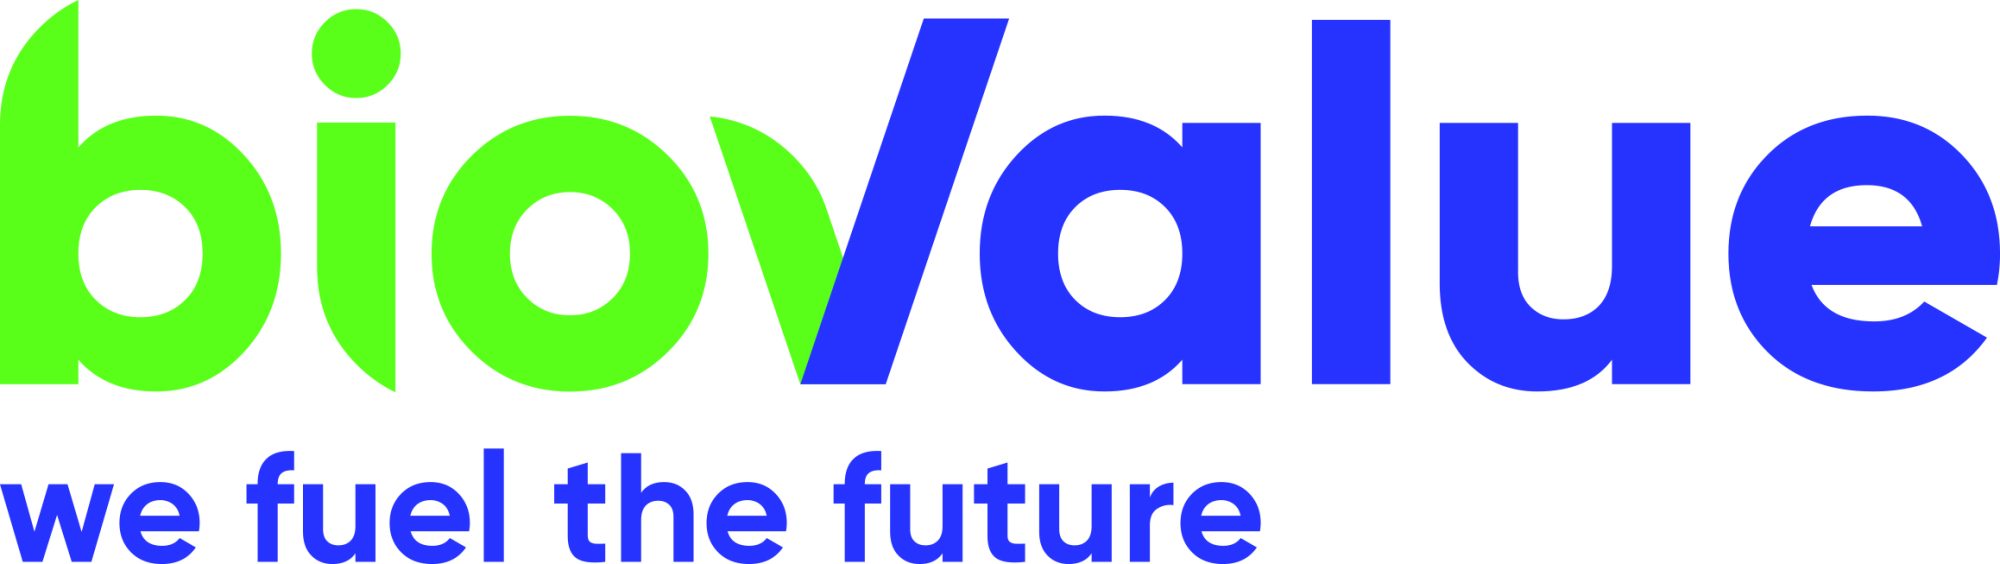 Biovalue clean logo fuel future